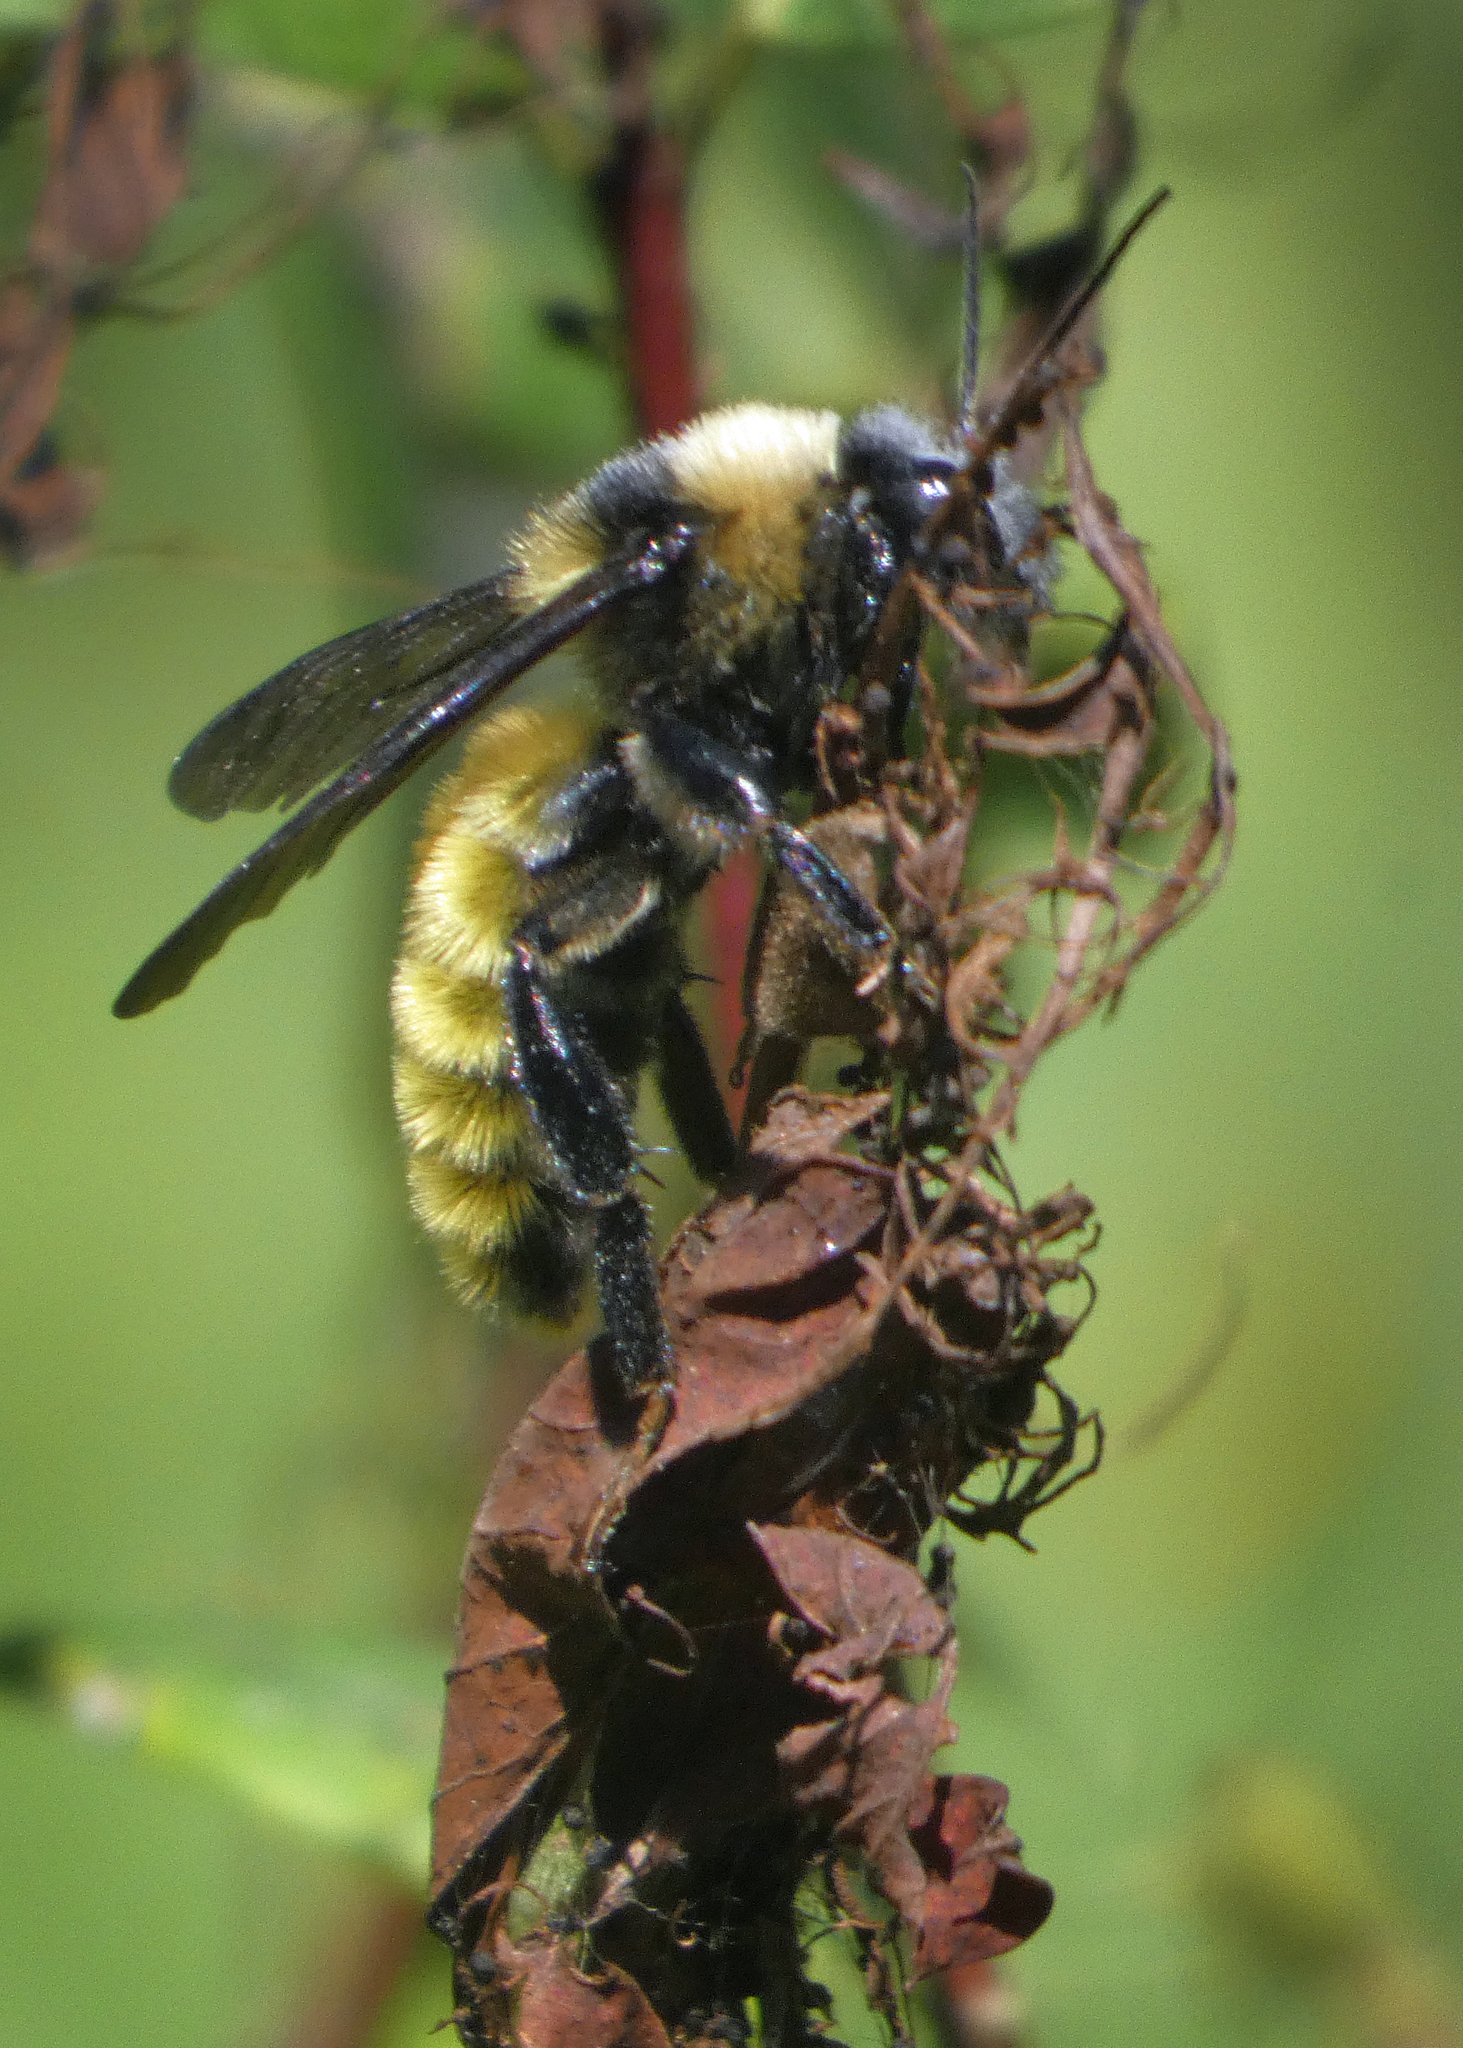 B pensylvanicus, a/k/a The American Bumble Bee